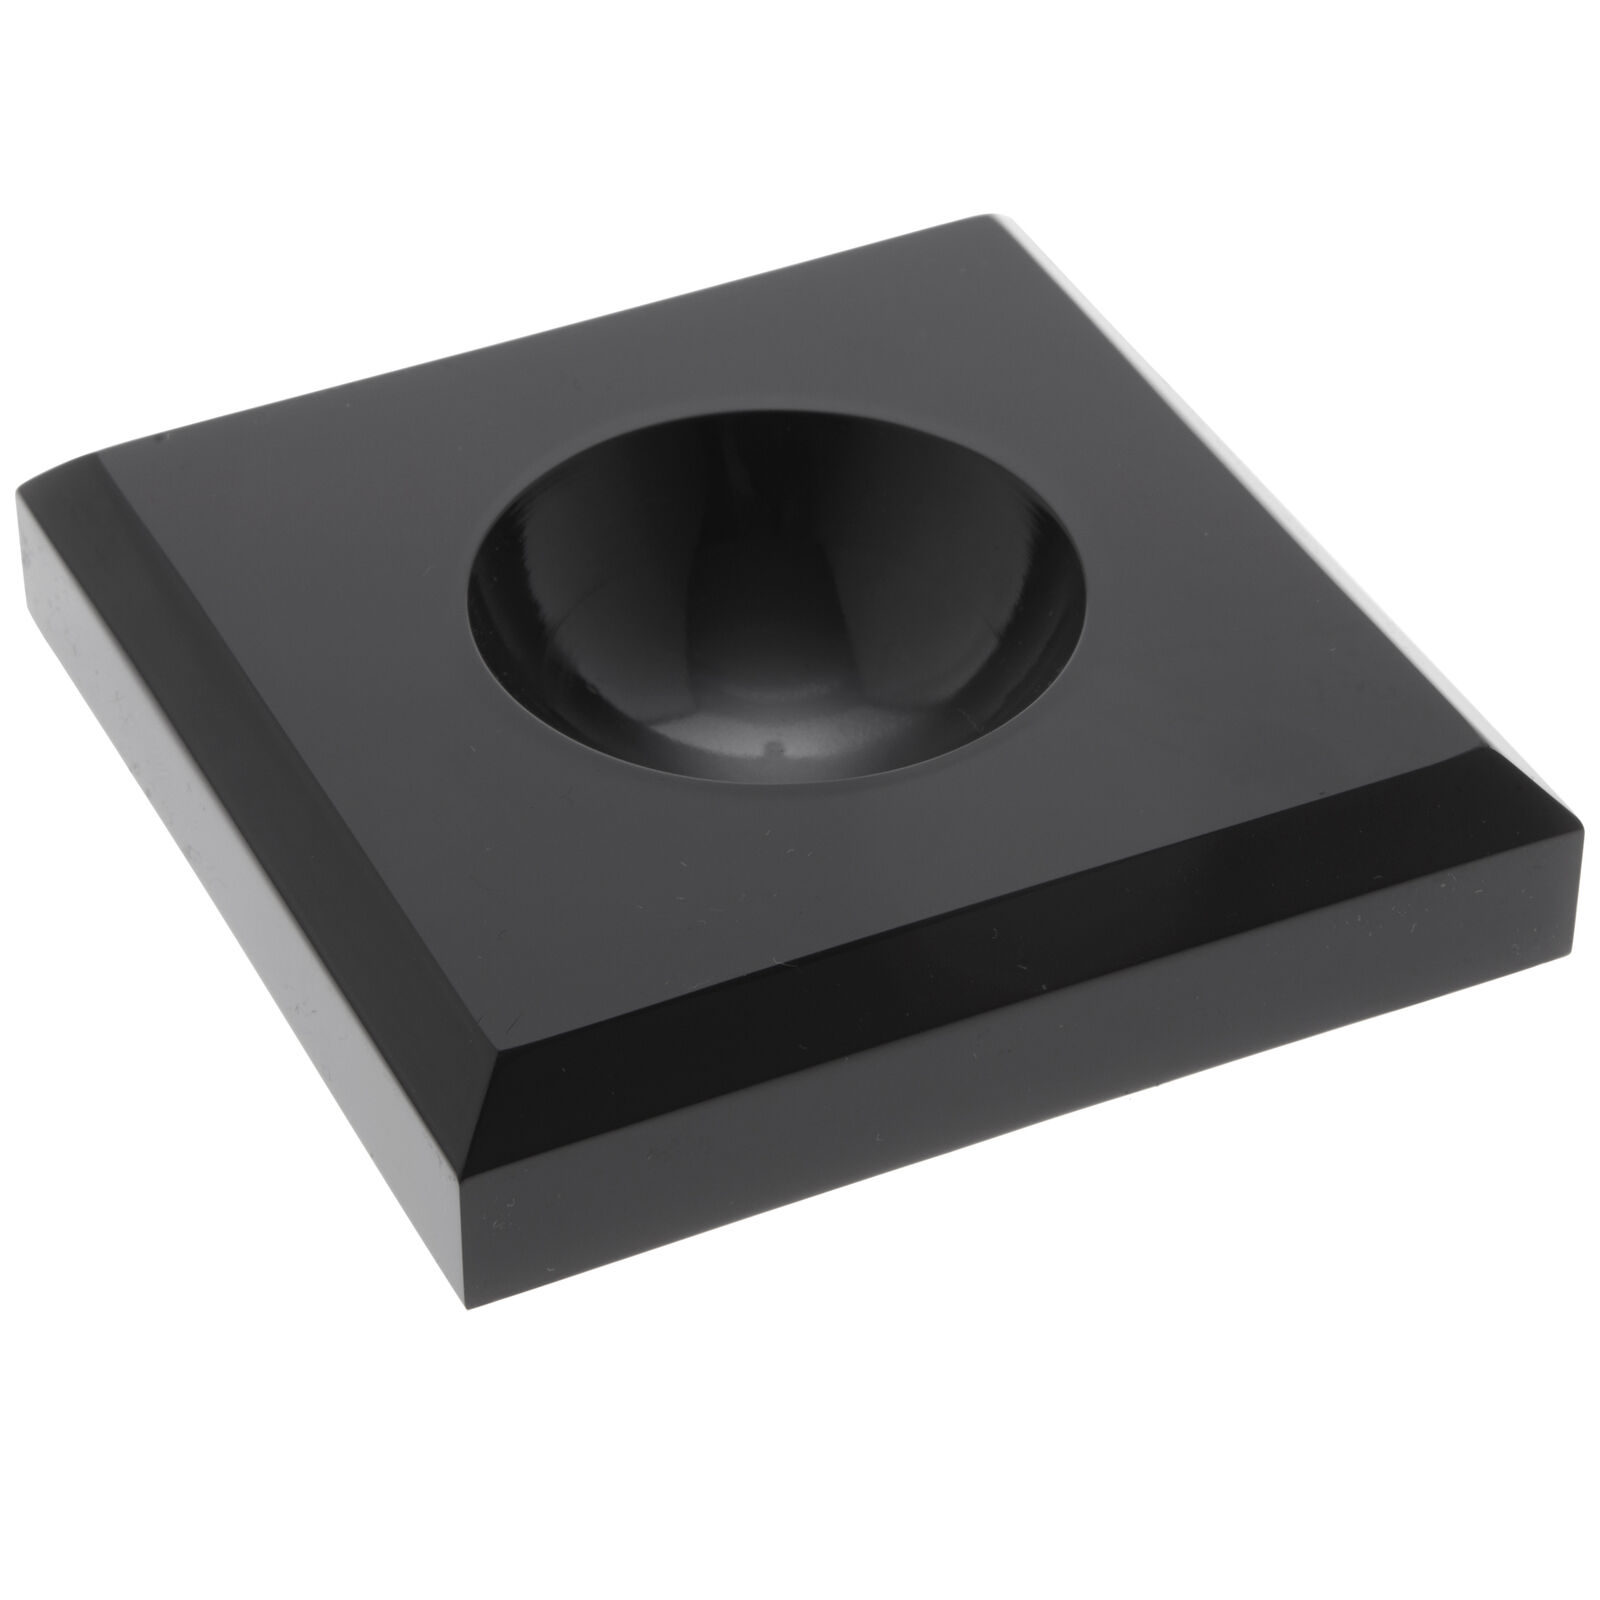 Plymor Black Acrylic Square Base W/ Circle, 0.75"h X 3.5"w X 3.5"d (3 Pack)